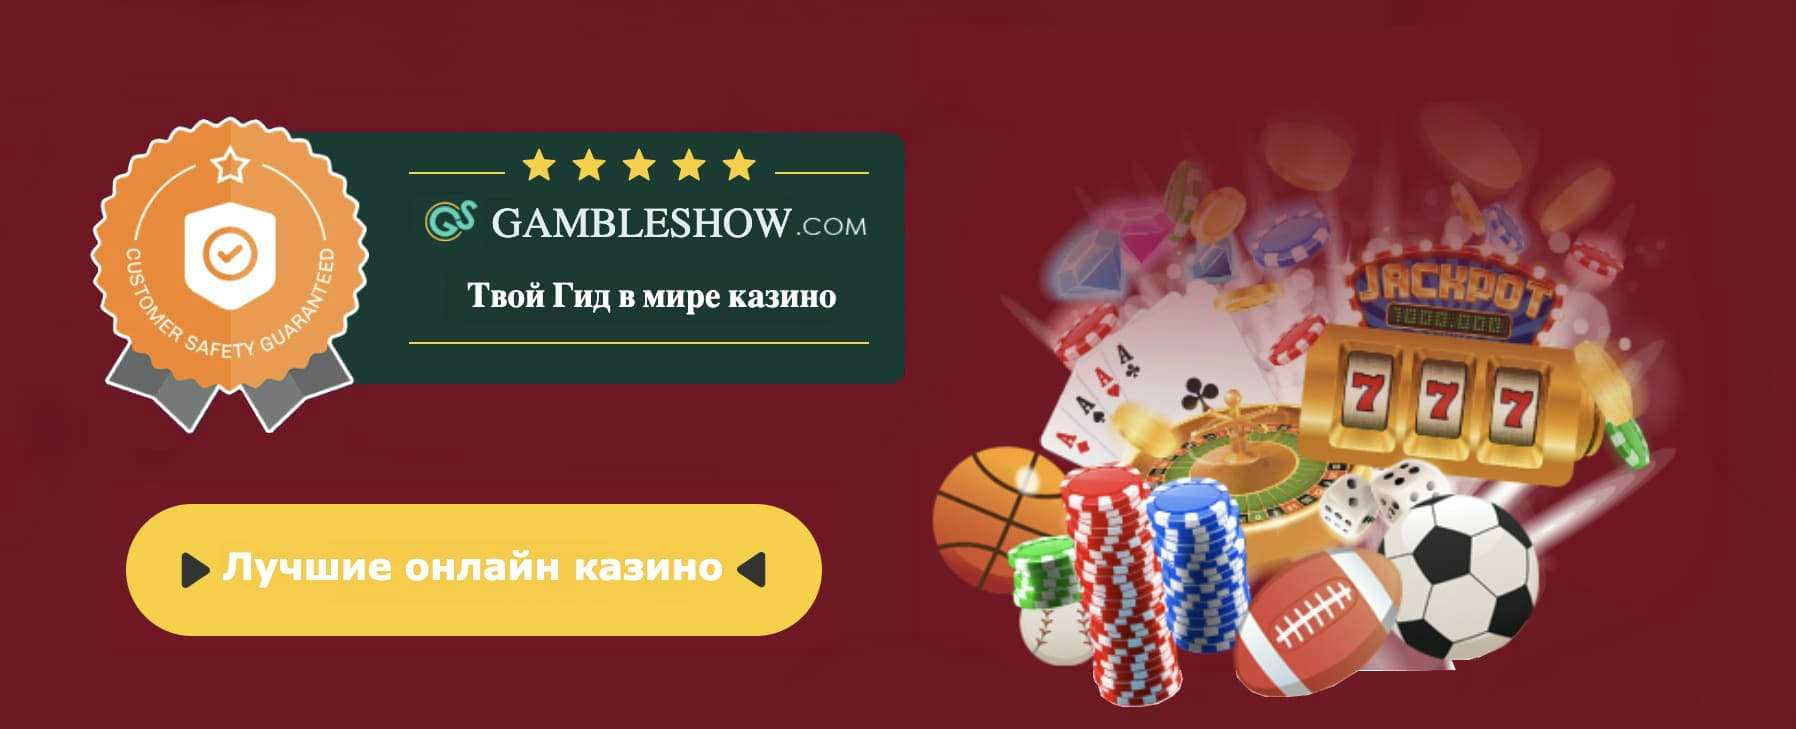 Caesars casino online slot game